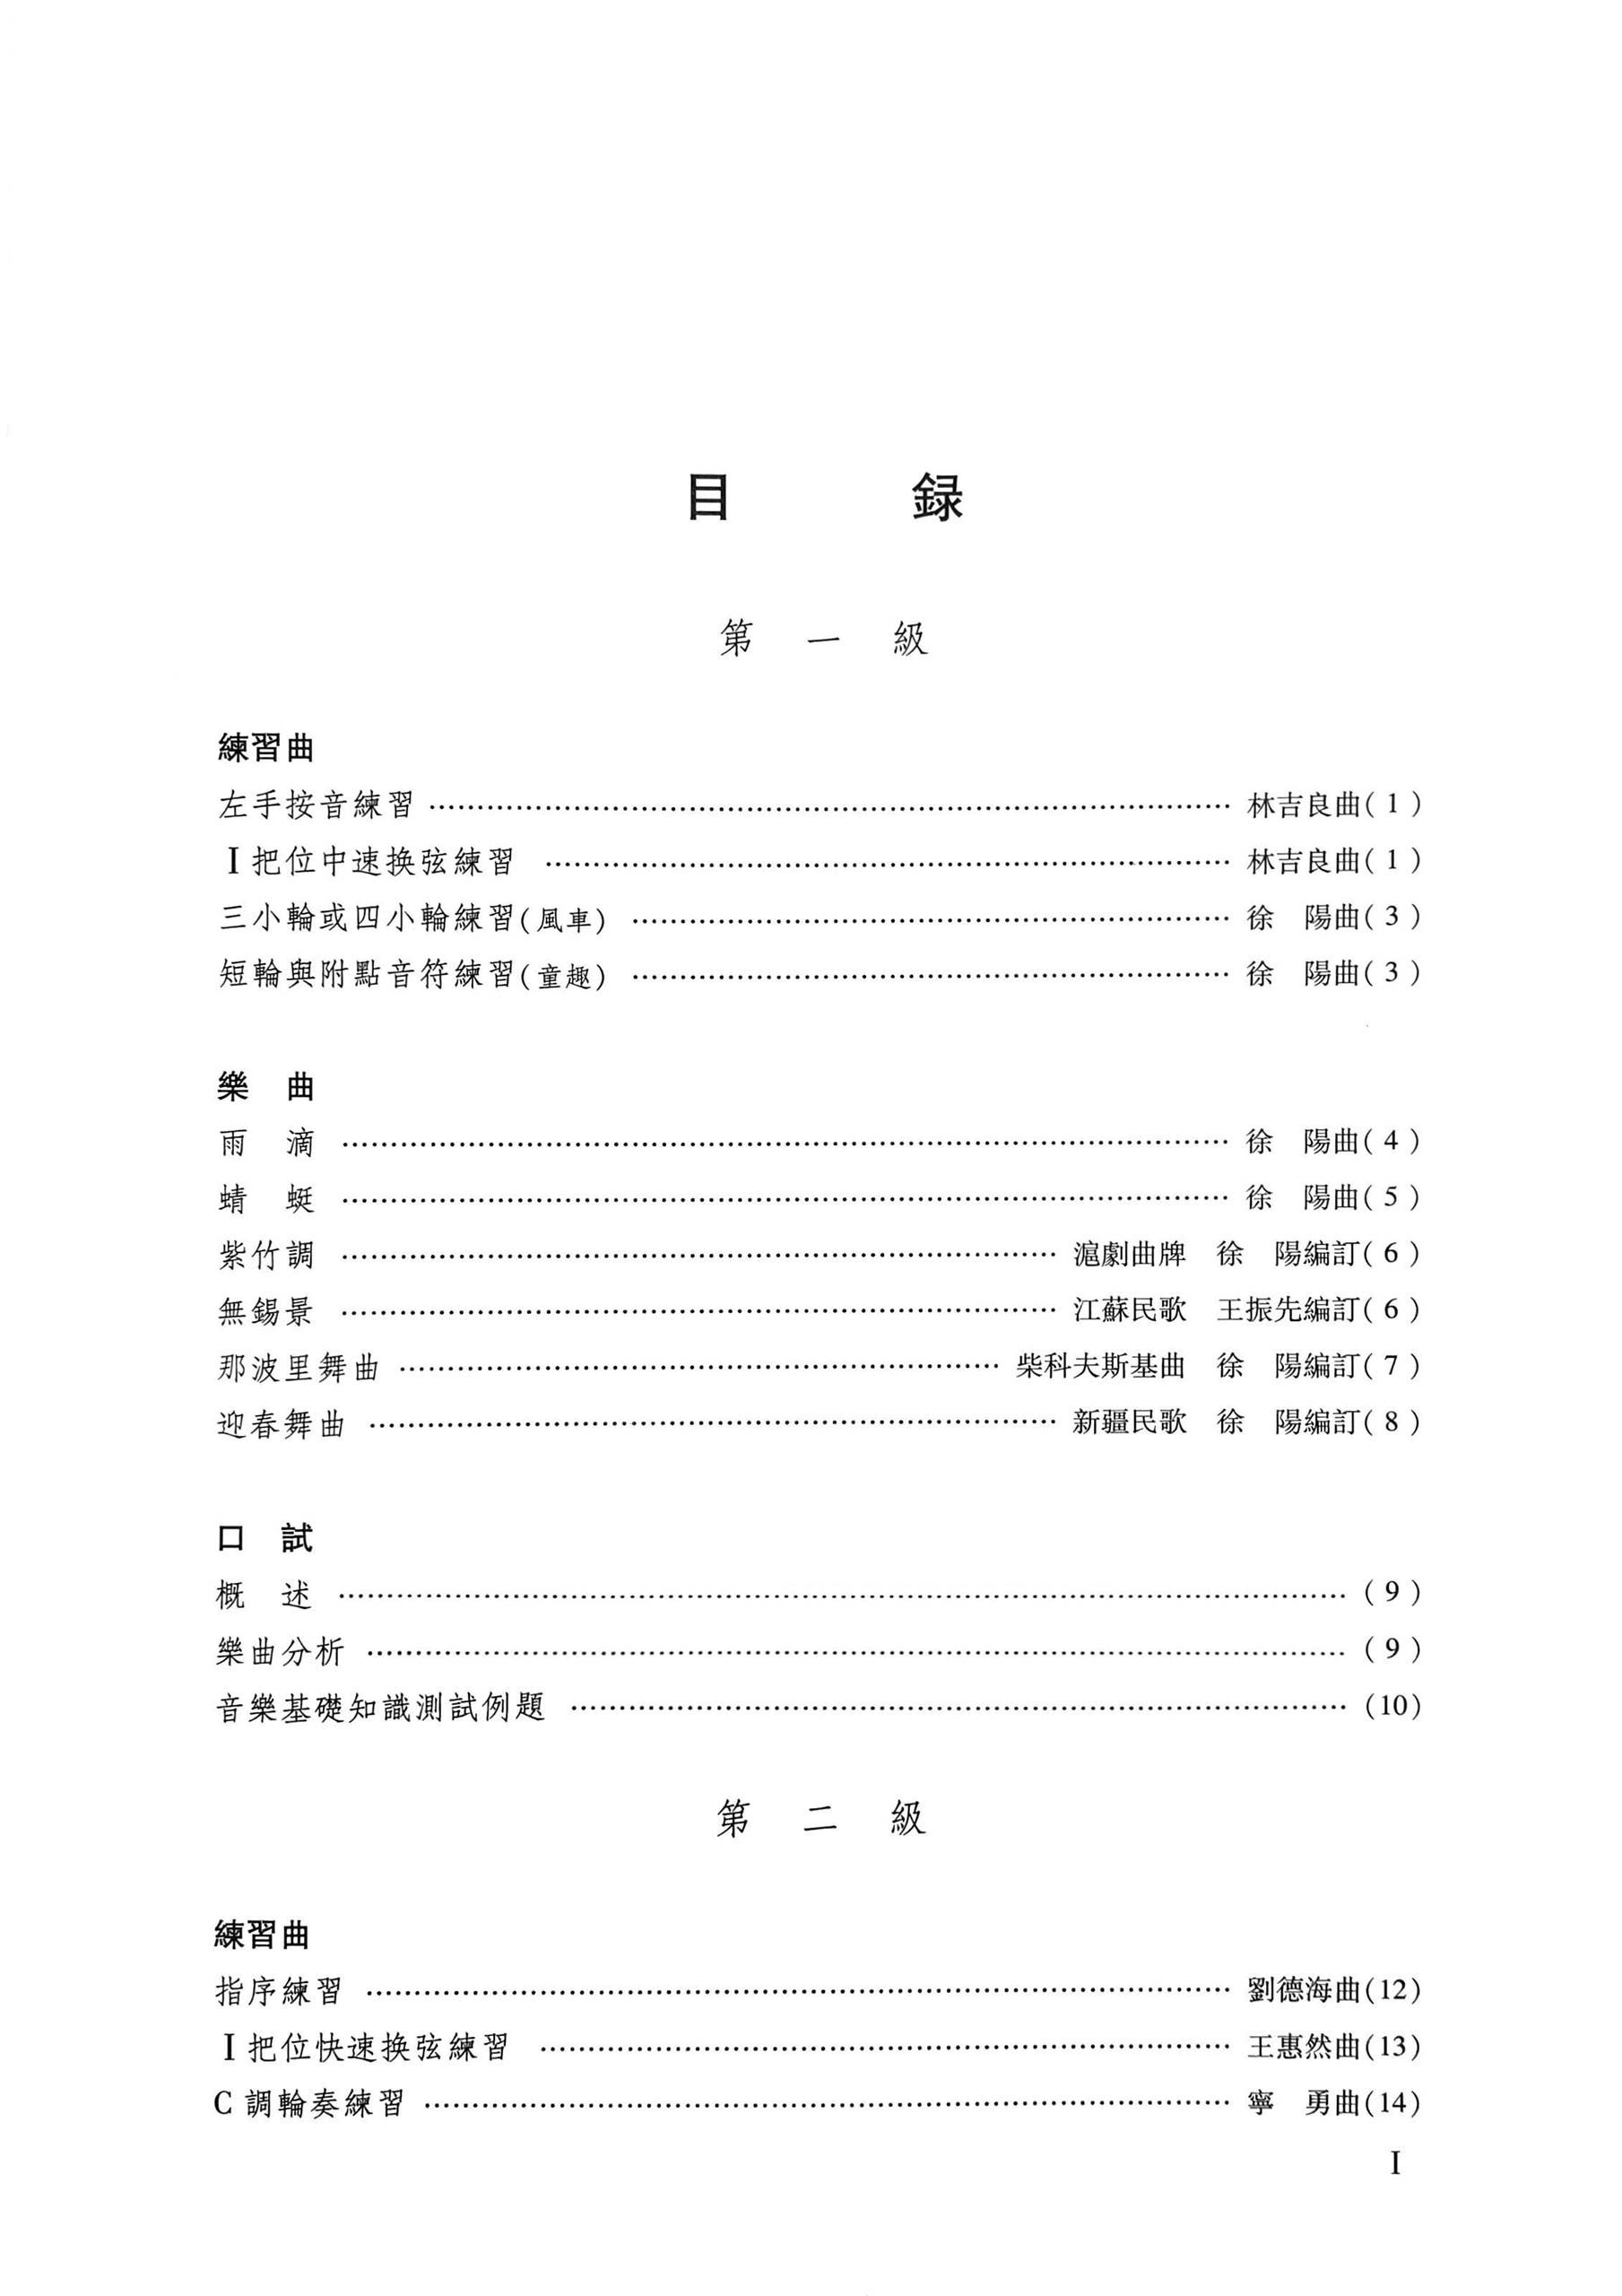 Zhongruan Grading Examination Book by CCOM – NAFA (Beginner Grade 1-6) Content Page 1